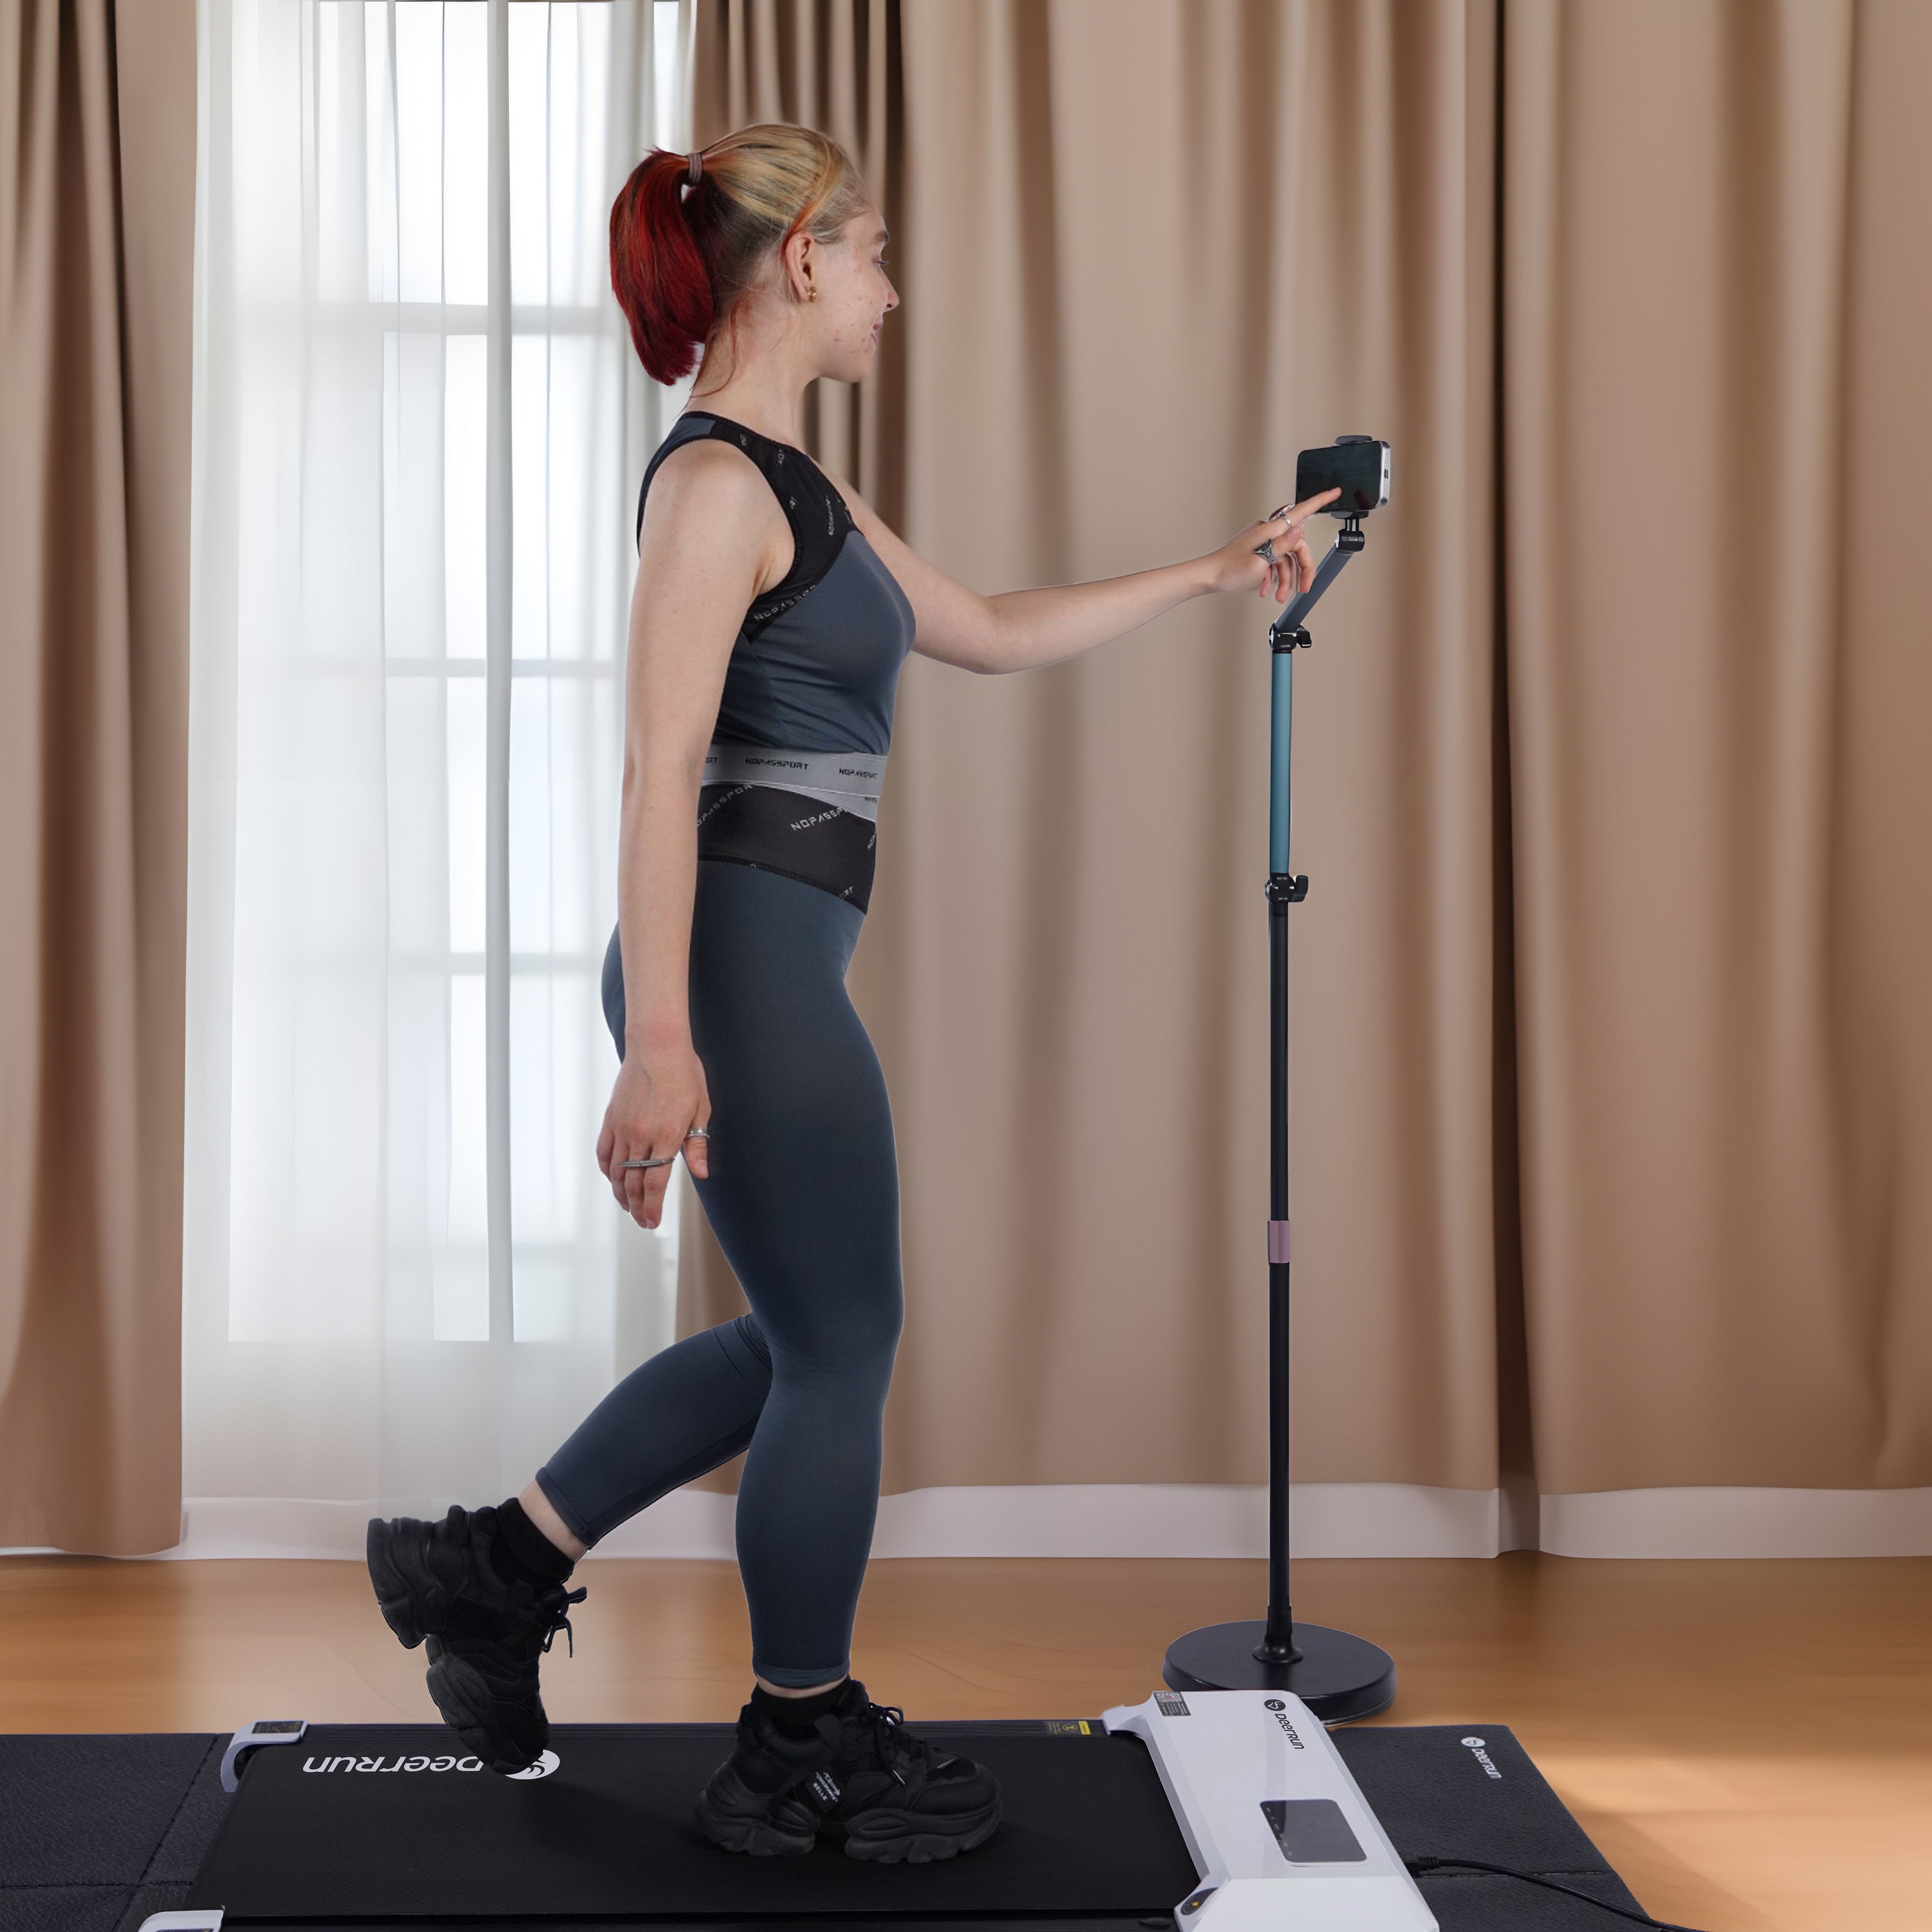 DeerRun® CoreBase Foldable Treadmill Mat - Waterproof, Anti-Slip, Noise-Reducing Design for Home Gyms